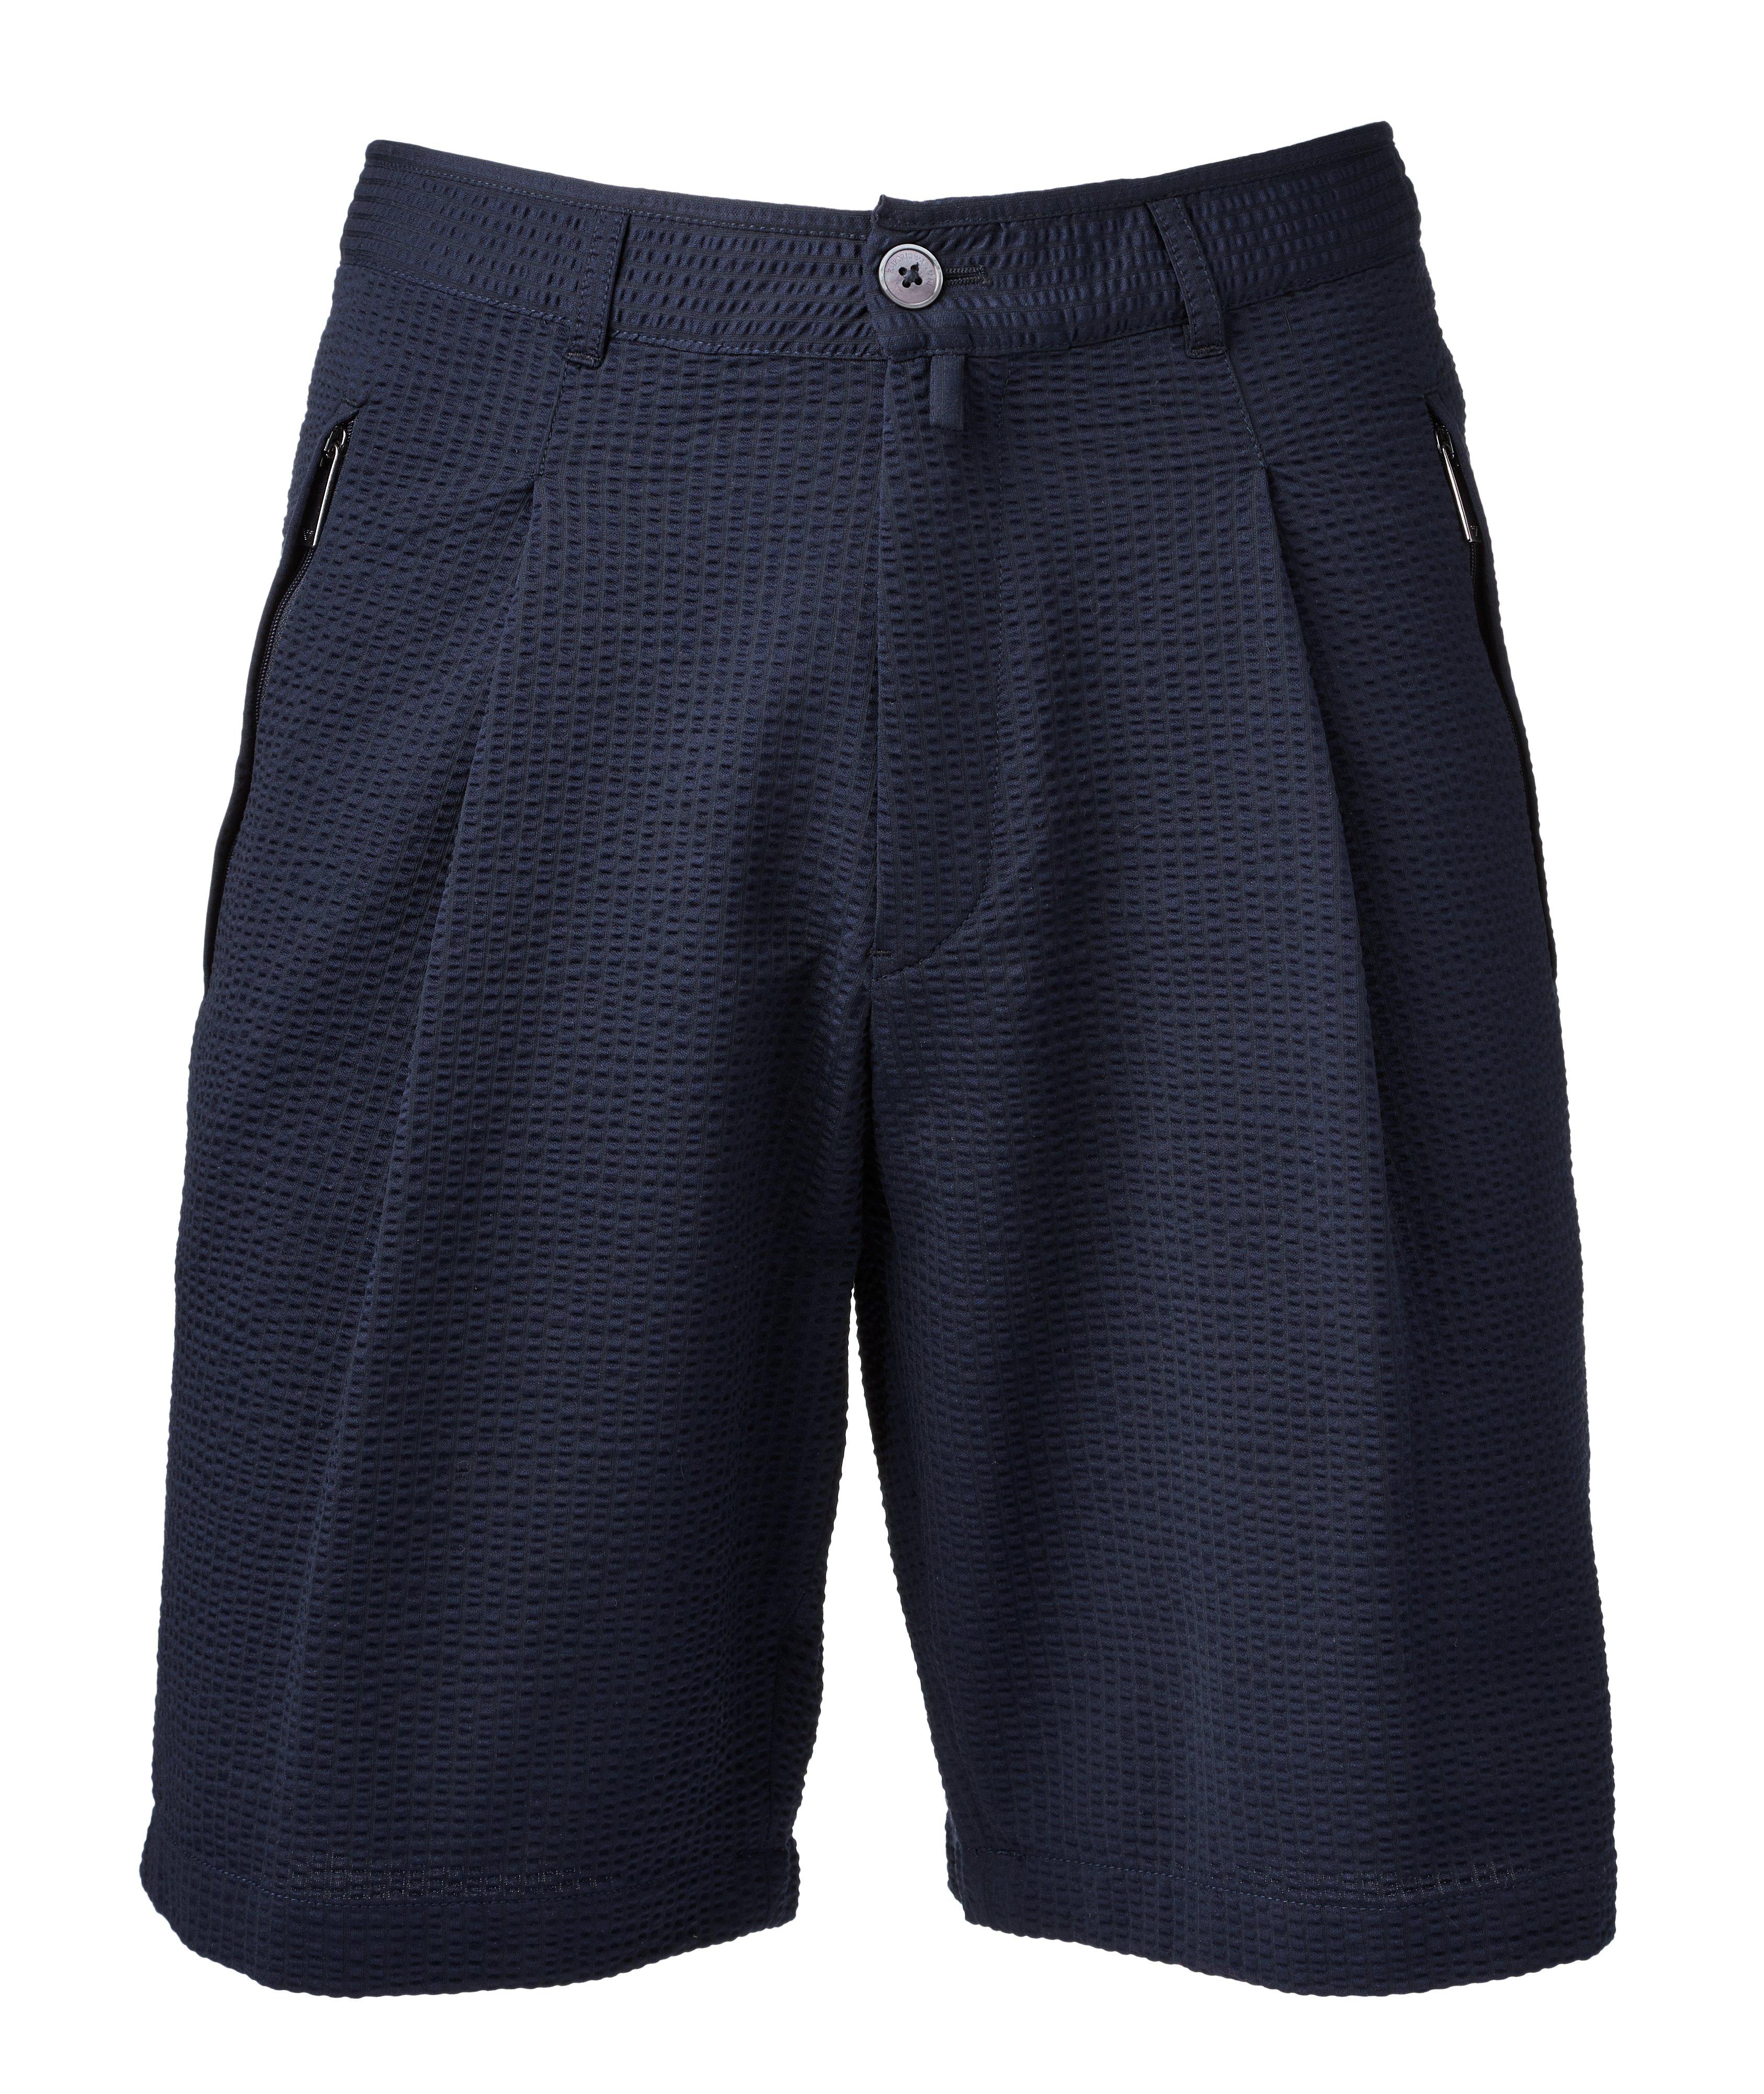 Cotton-Blend Bermuda Shorts image 0